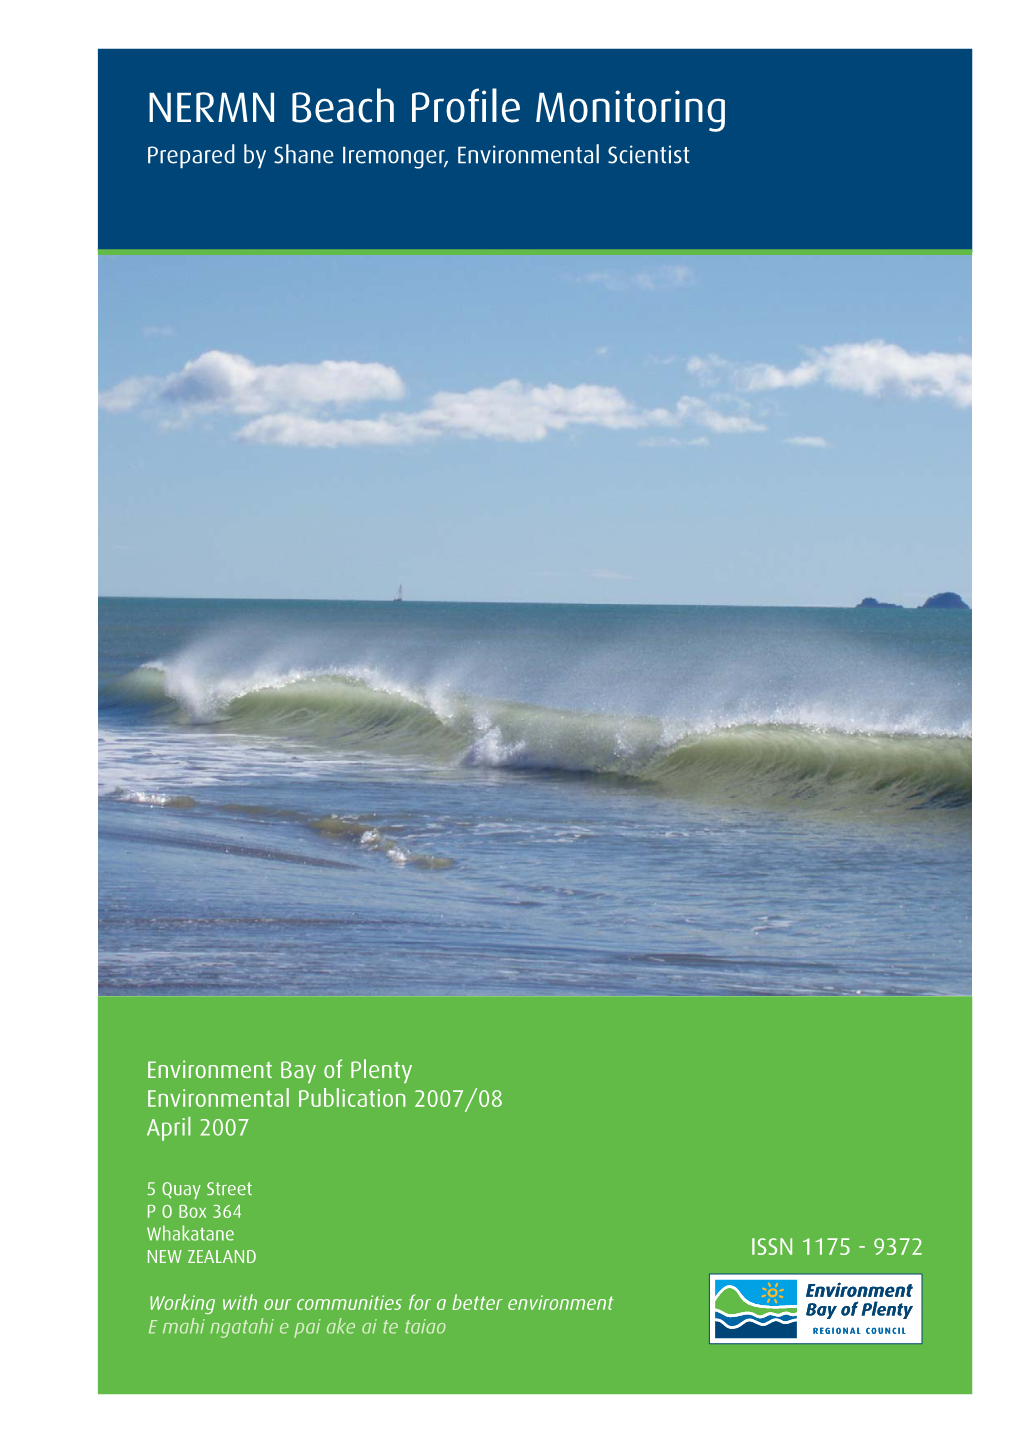 NERMN Beach Profile Monitoring Environmental Publication 2007/08 Ii Environment Bay of Plenty